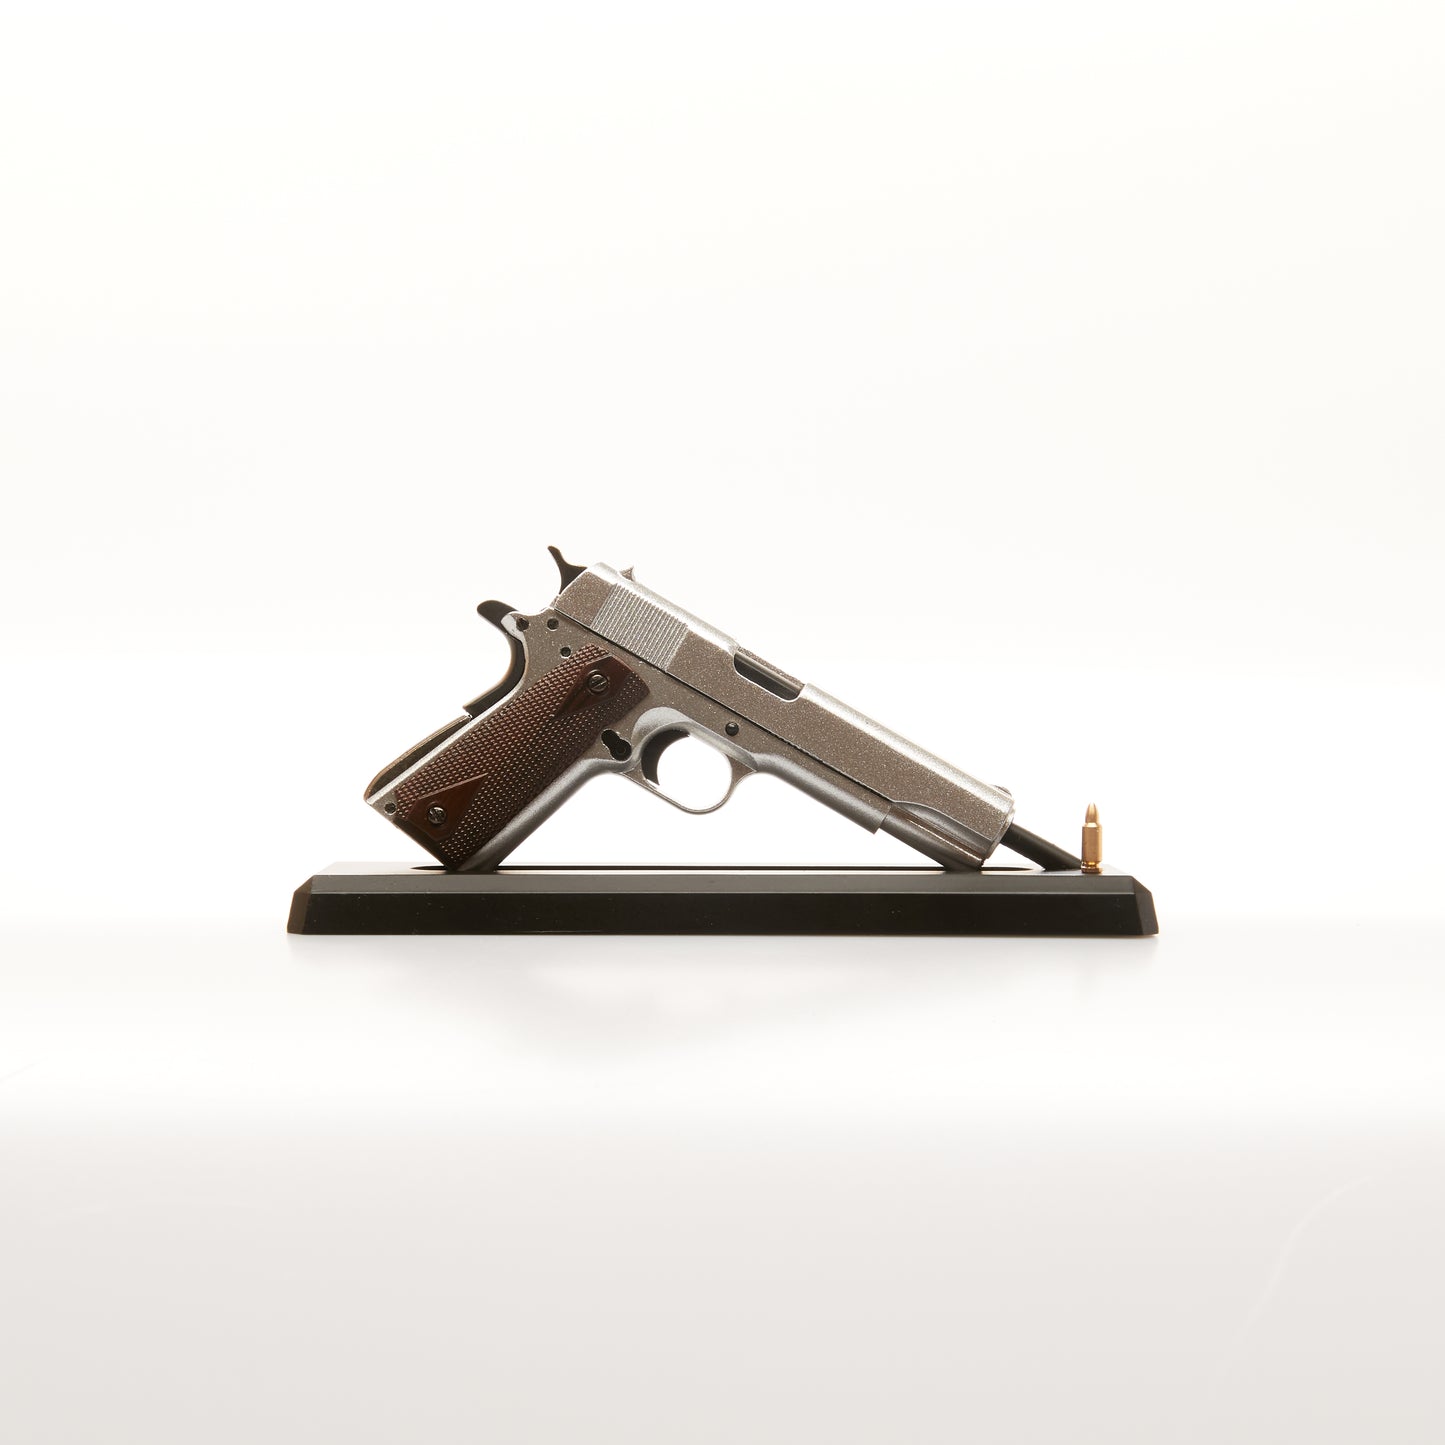 Goatguns Miniature Scale Model M1911 Pistol - Silver - Dime